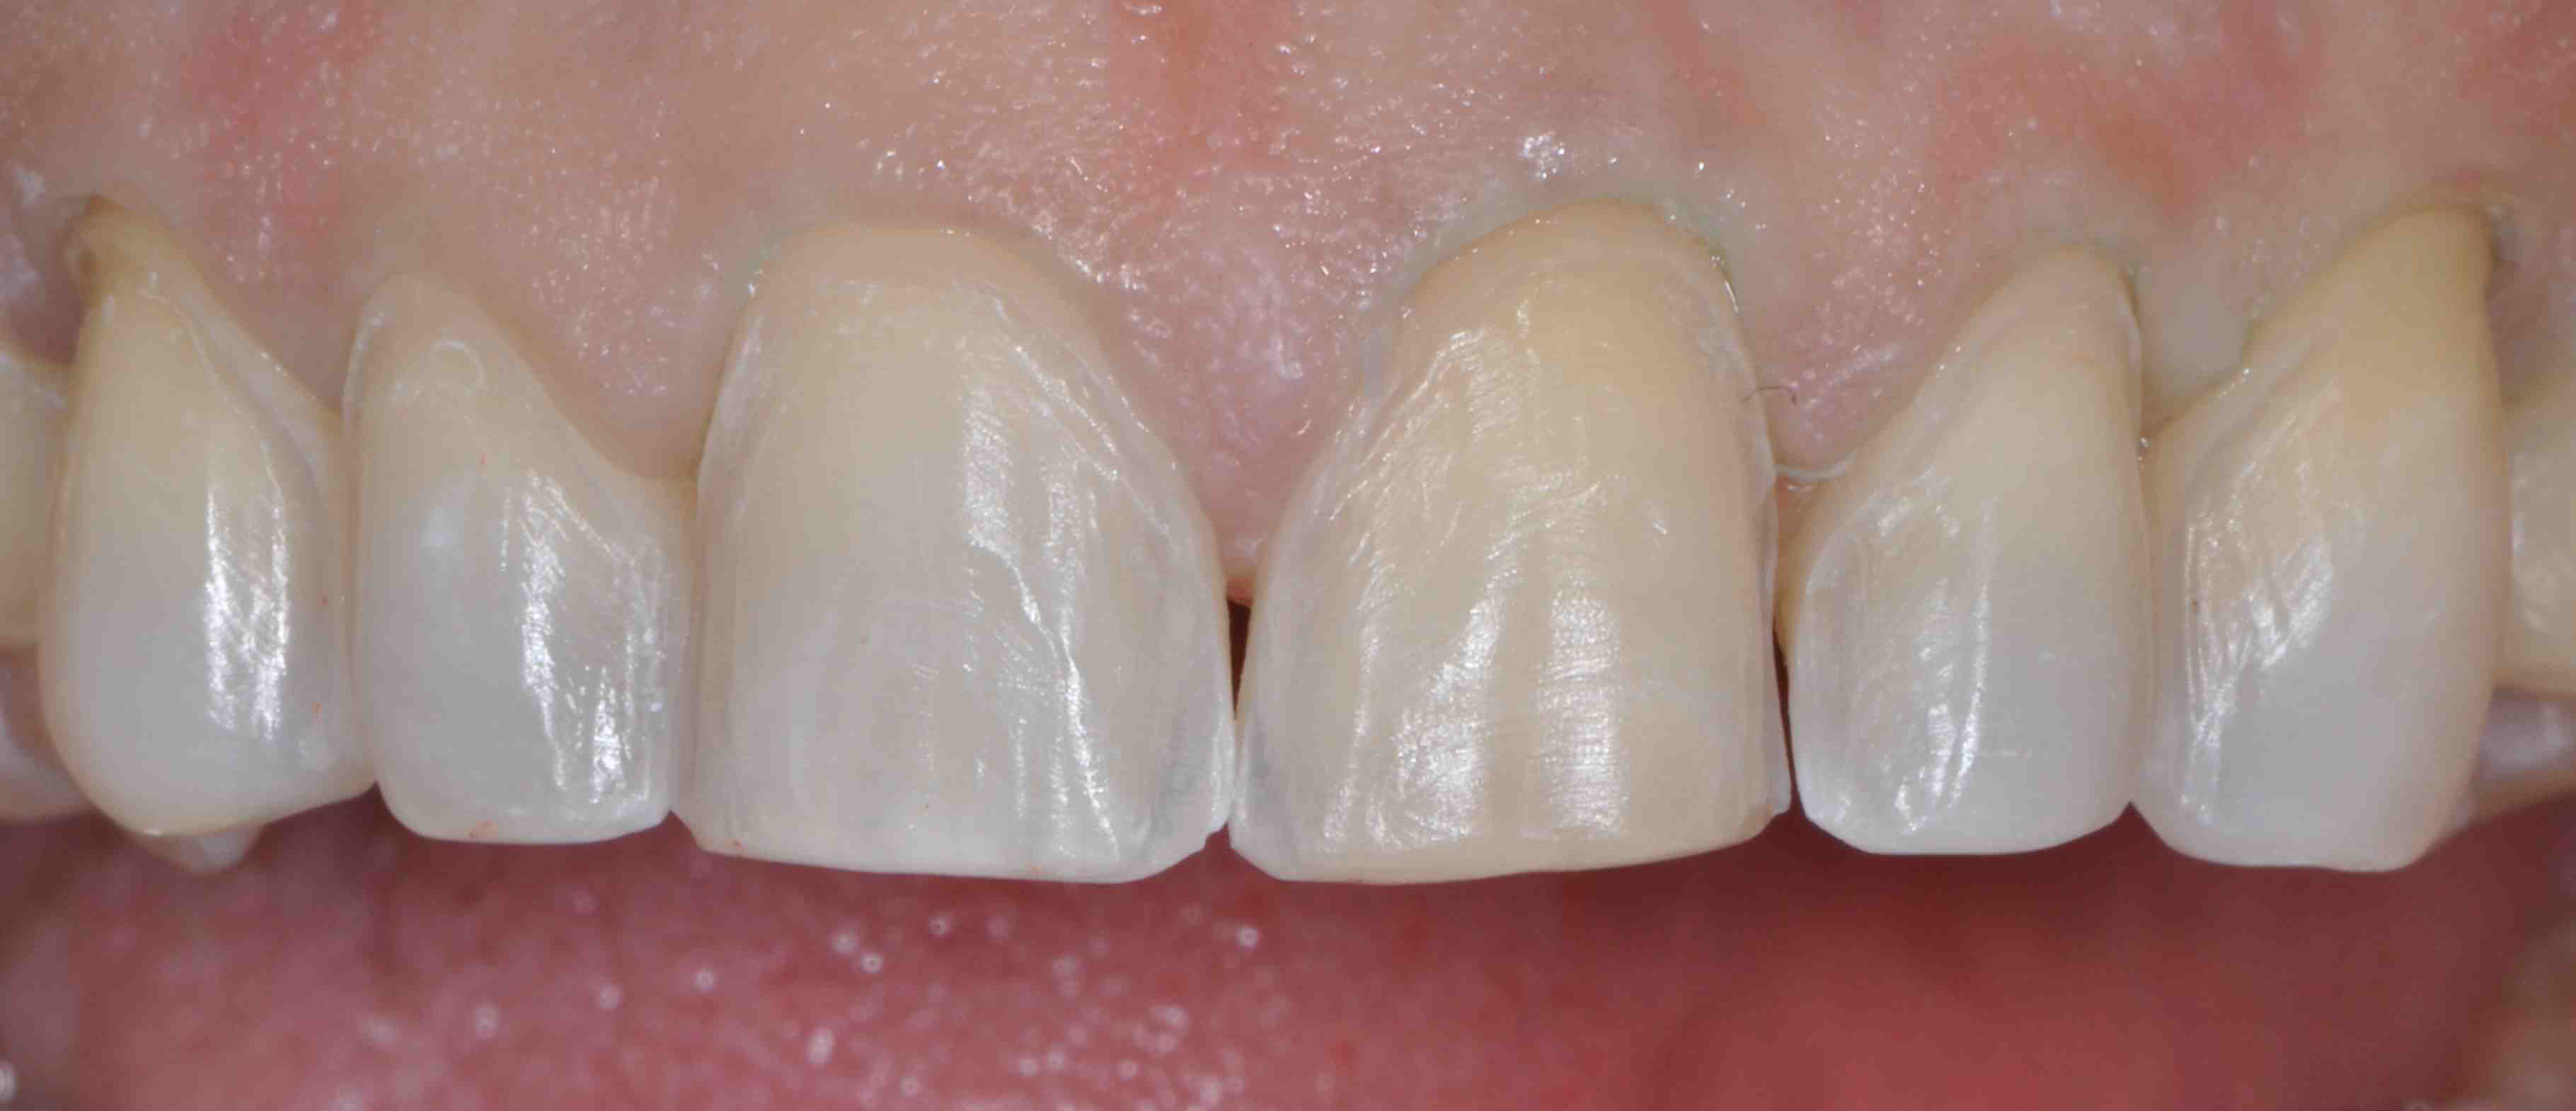 3. Understanding the Benefits of Veneer Teeth Prep 